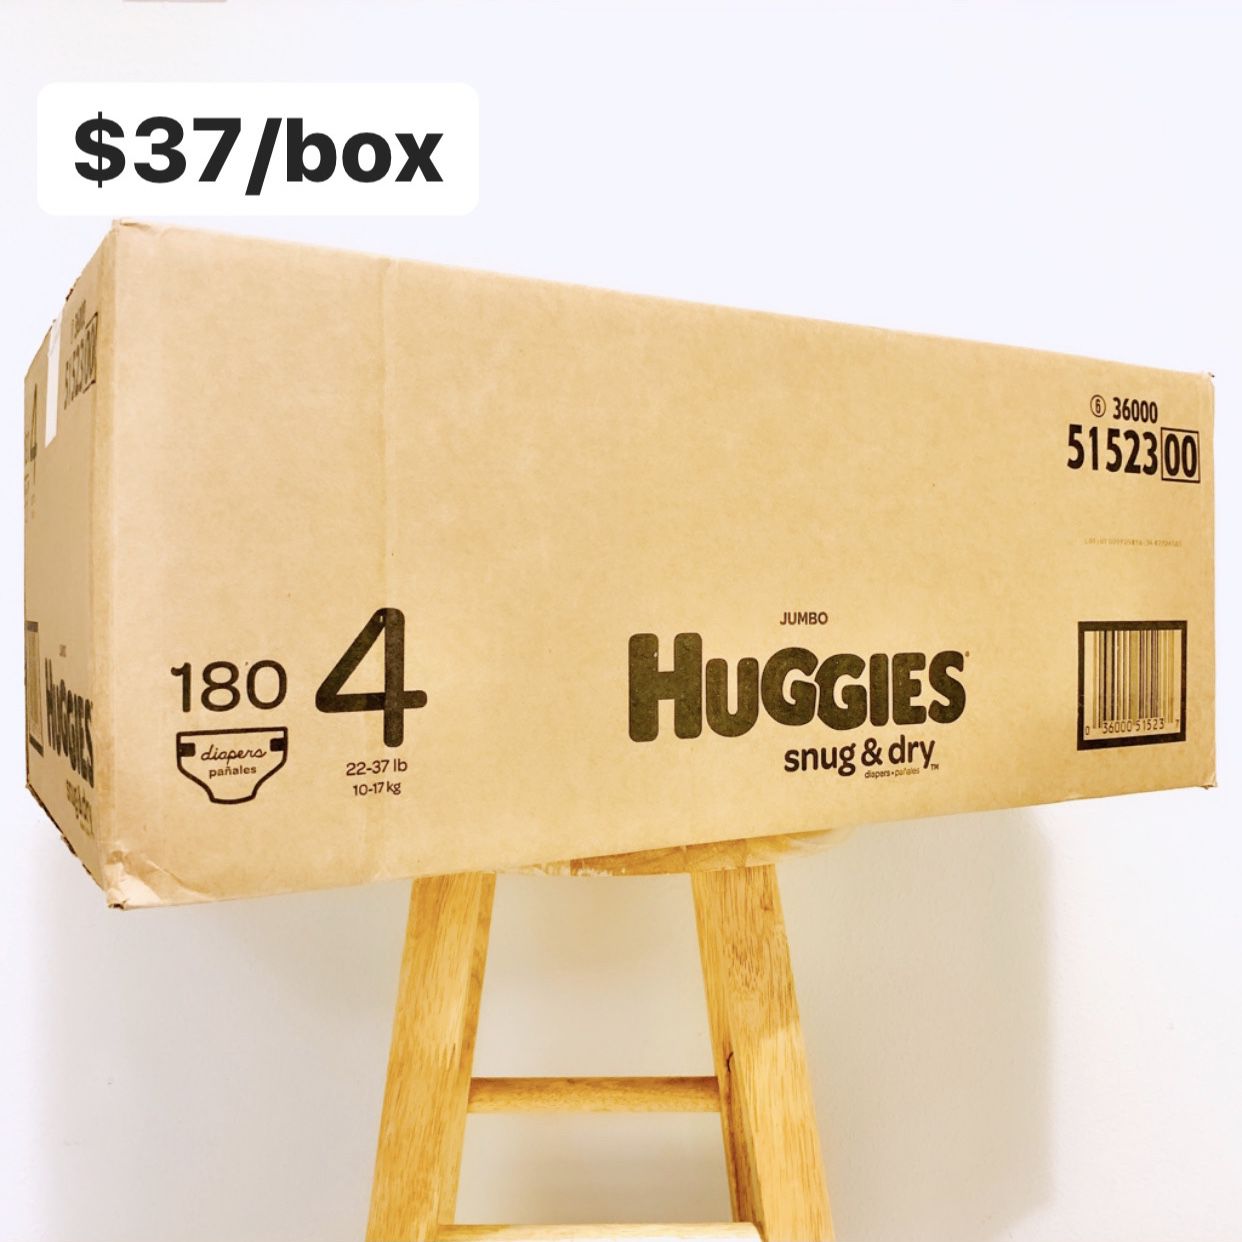 Size 4 (22-37 lbs) Huggies Snug Dry (180 baby diapers)